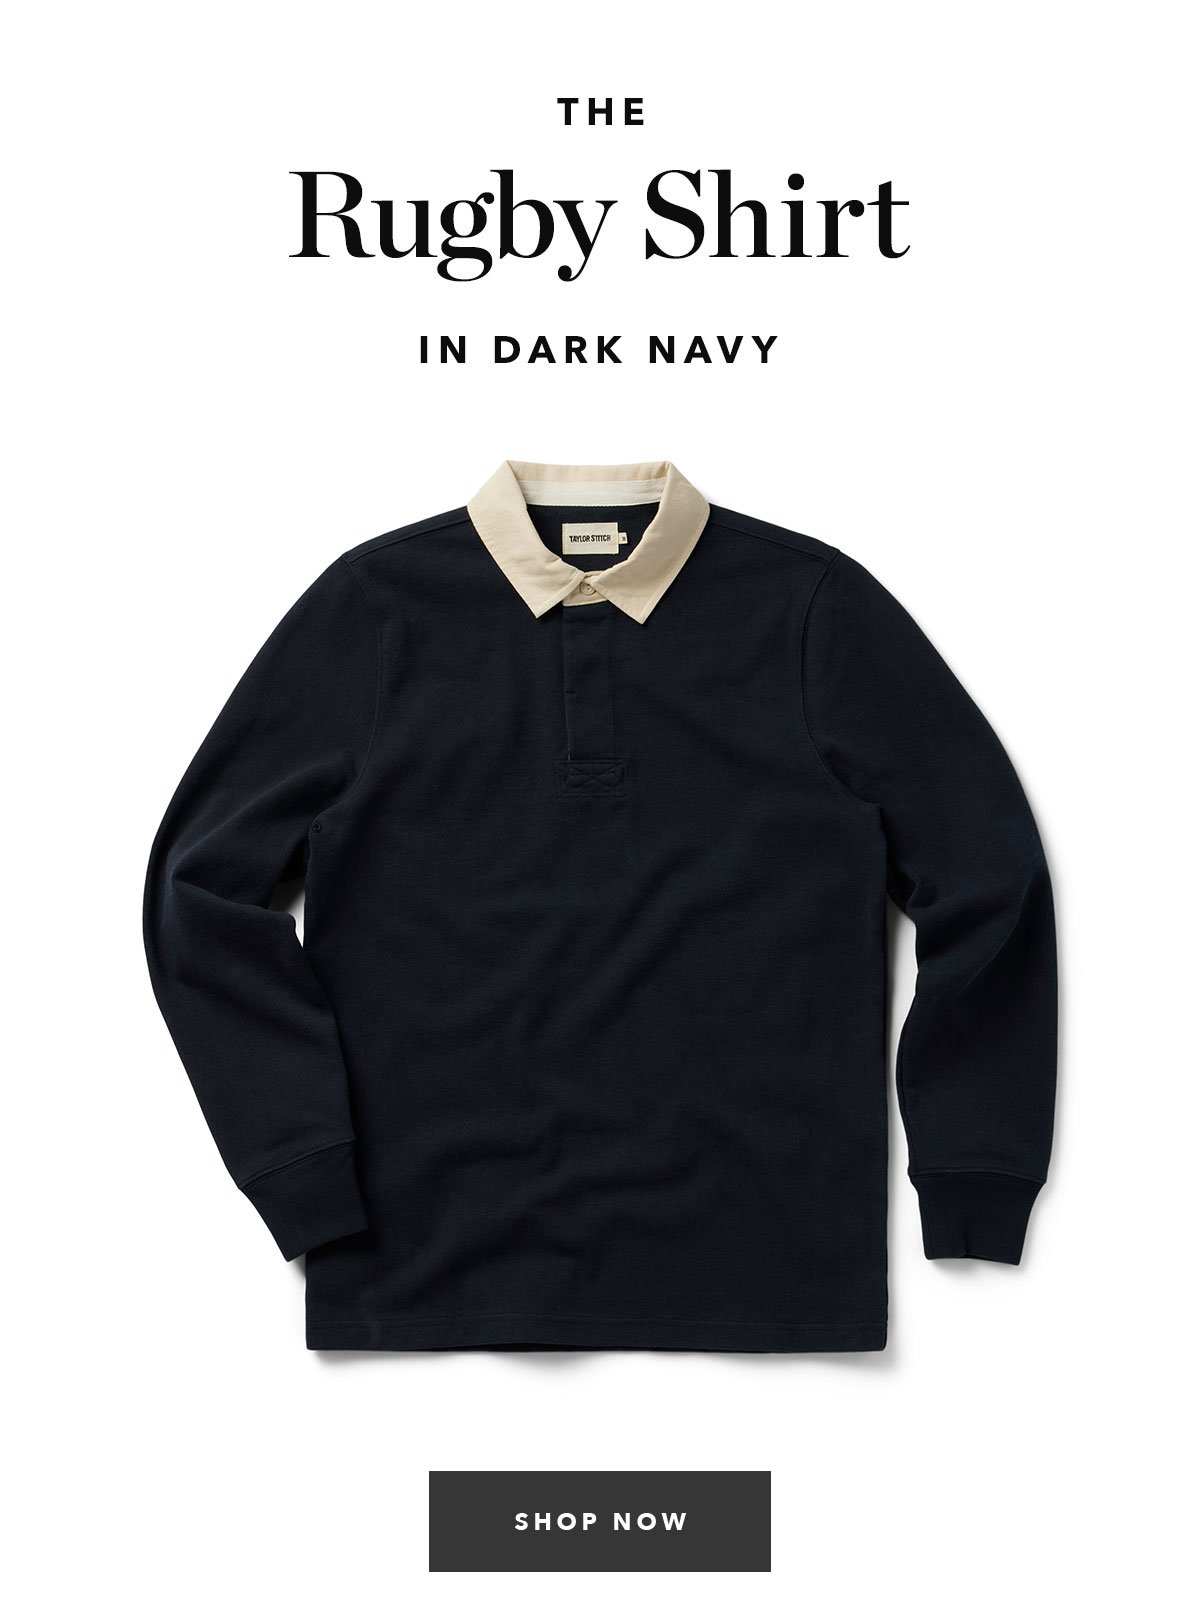 The Rugby Shirt in Dark Navy